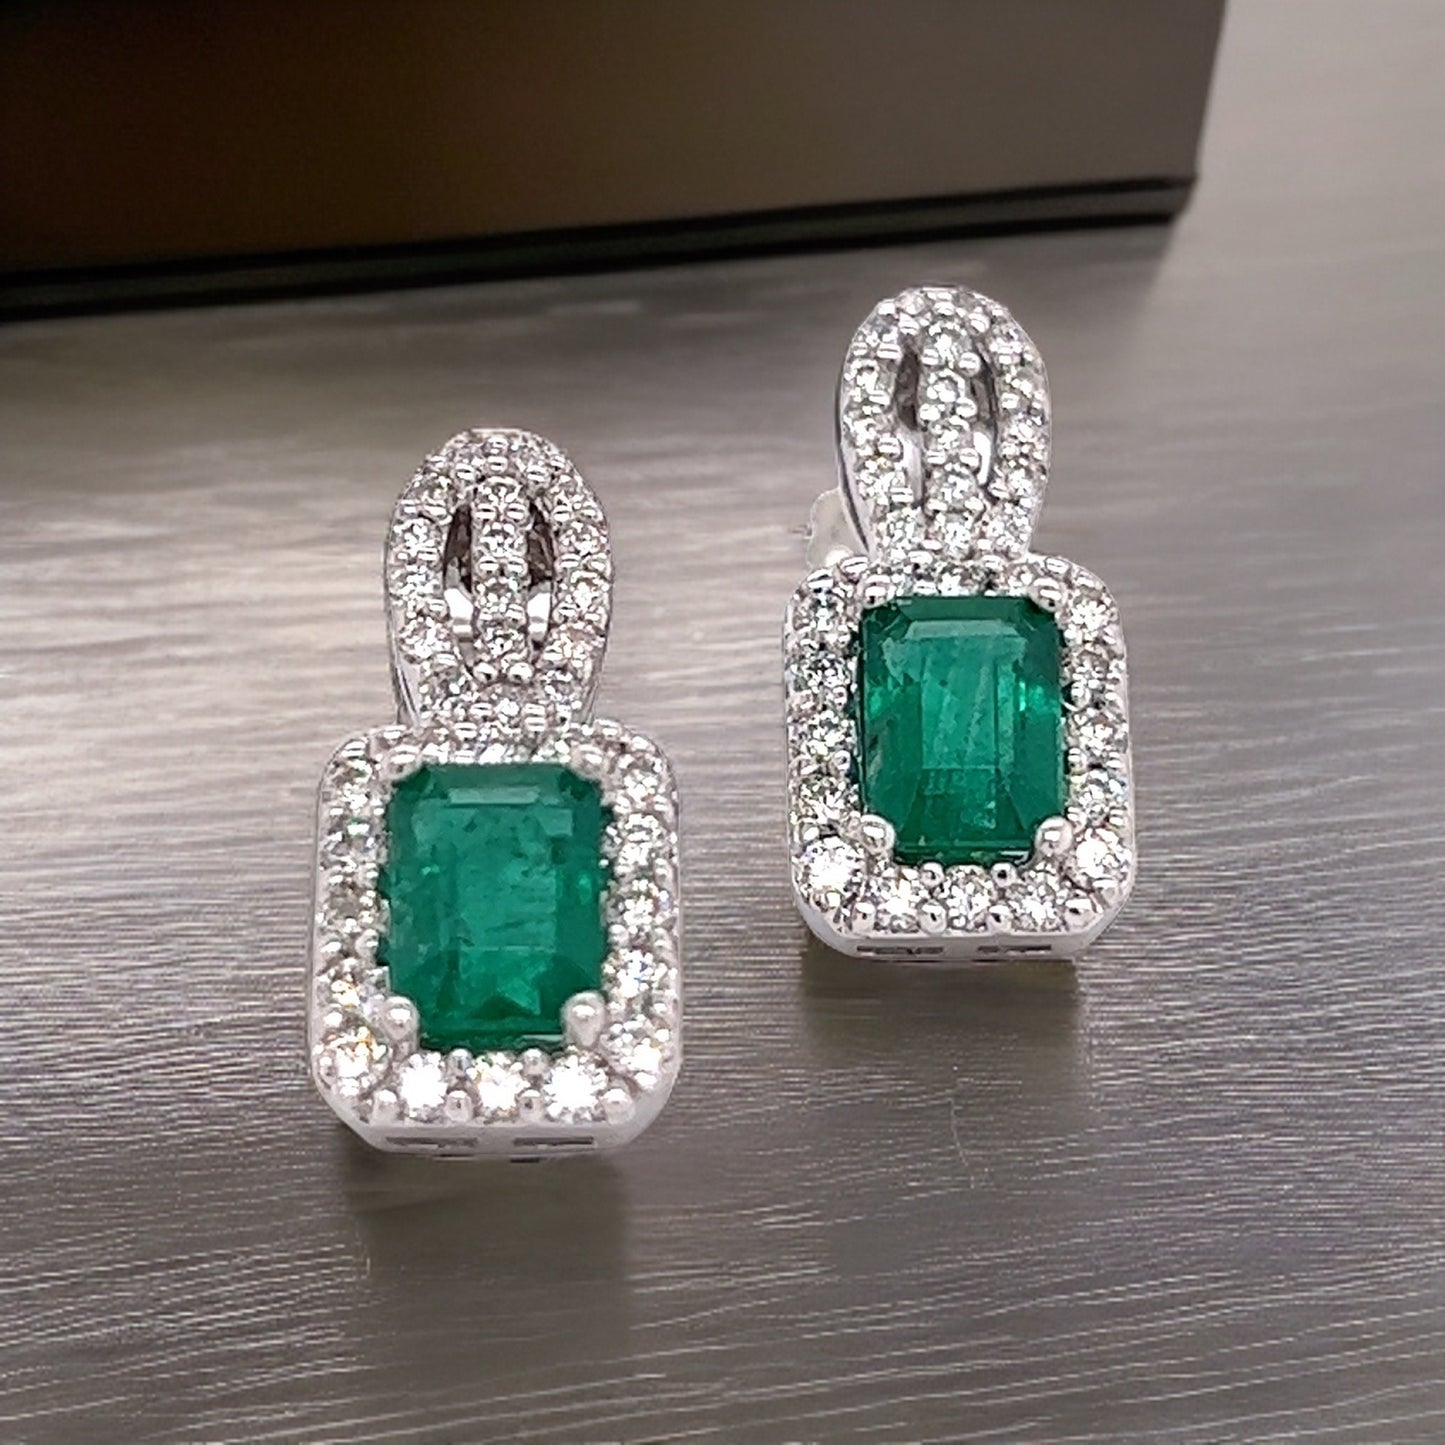 Natural Emerald Diamond Stud Earrings 14k Gold 2.74 TCW Certified $6,950 215406